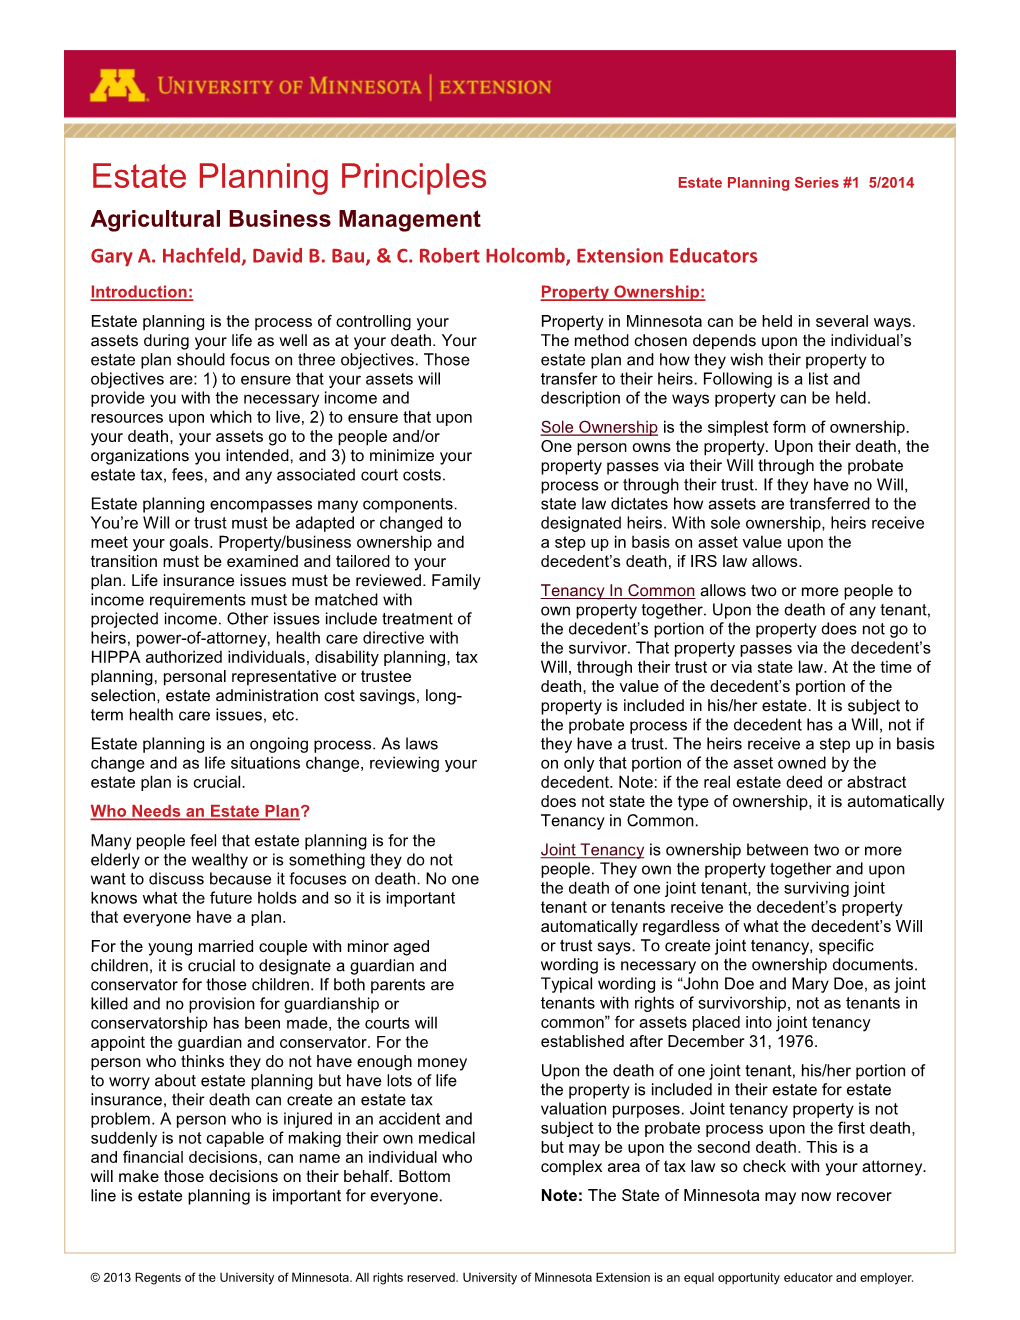 U.M. Estate Planning Series